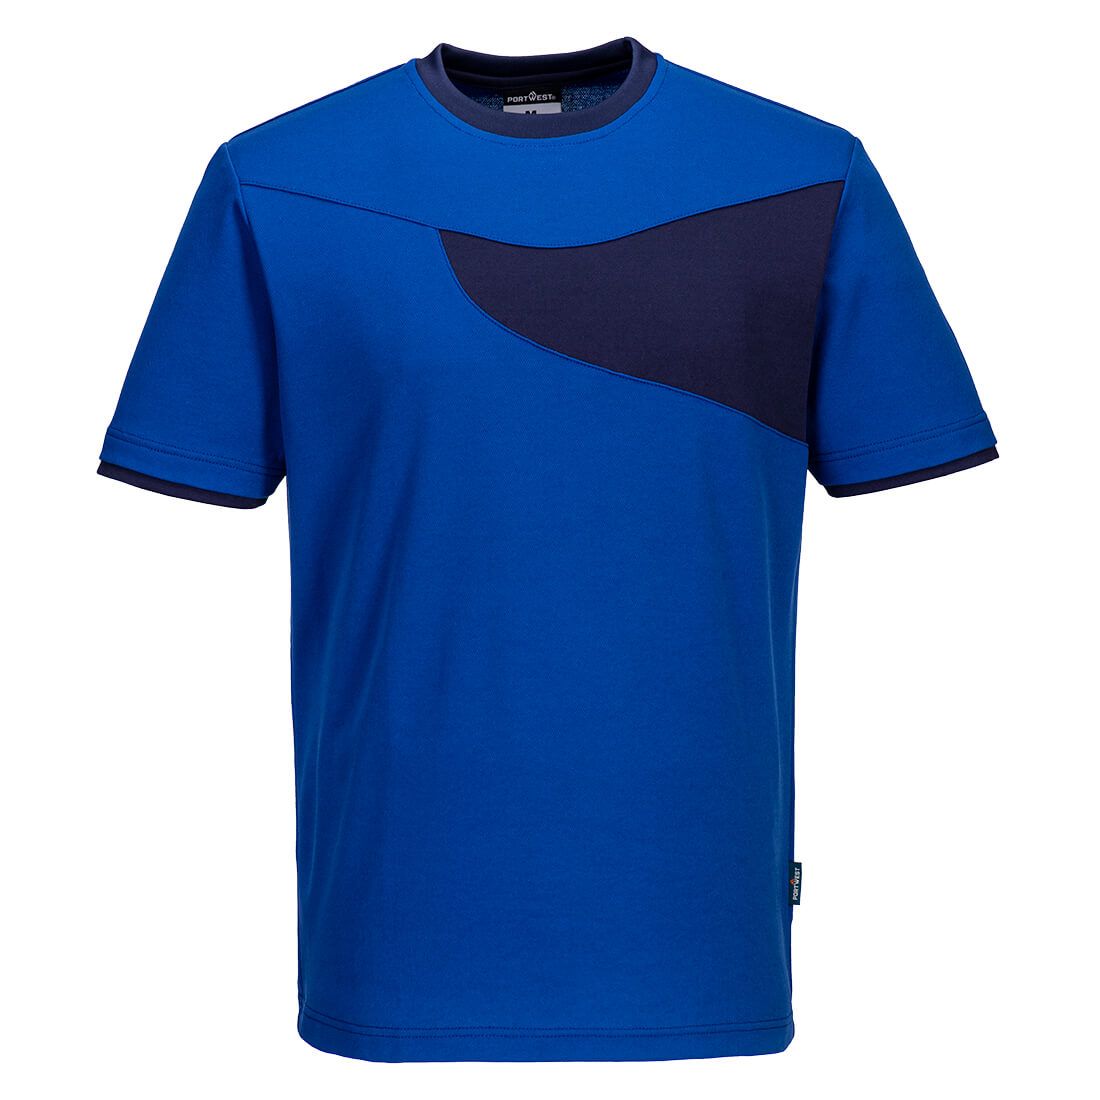 S170 - Hi-Vis Cotton Comfort T-Shirt S/S